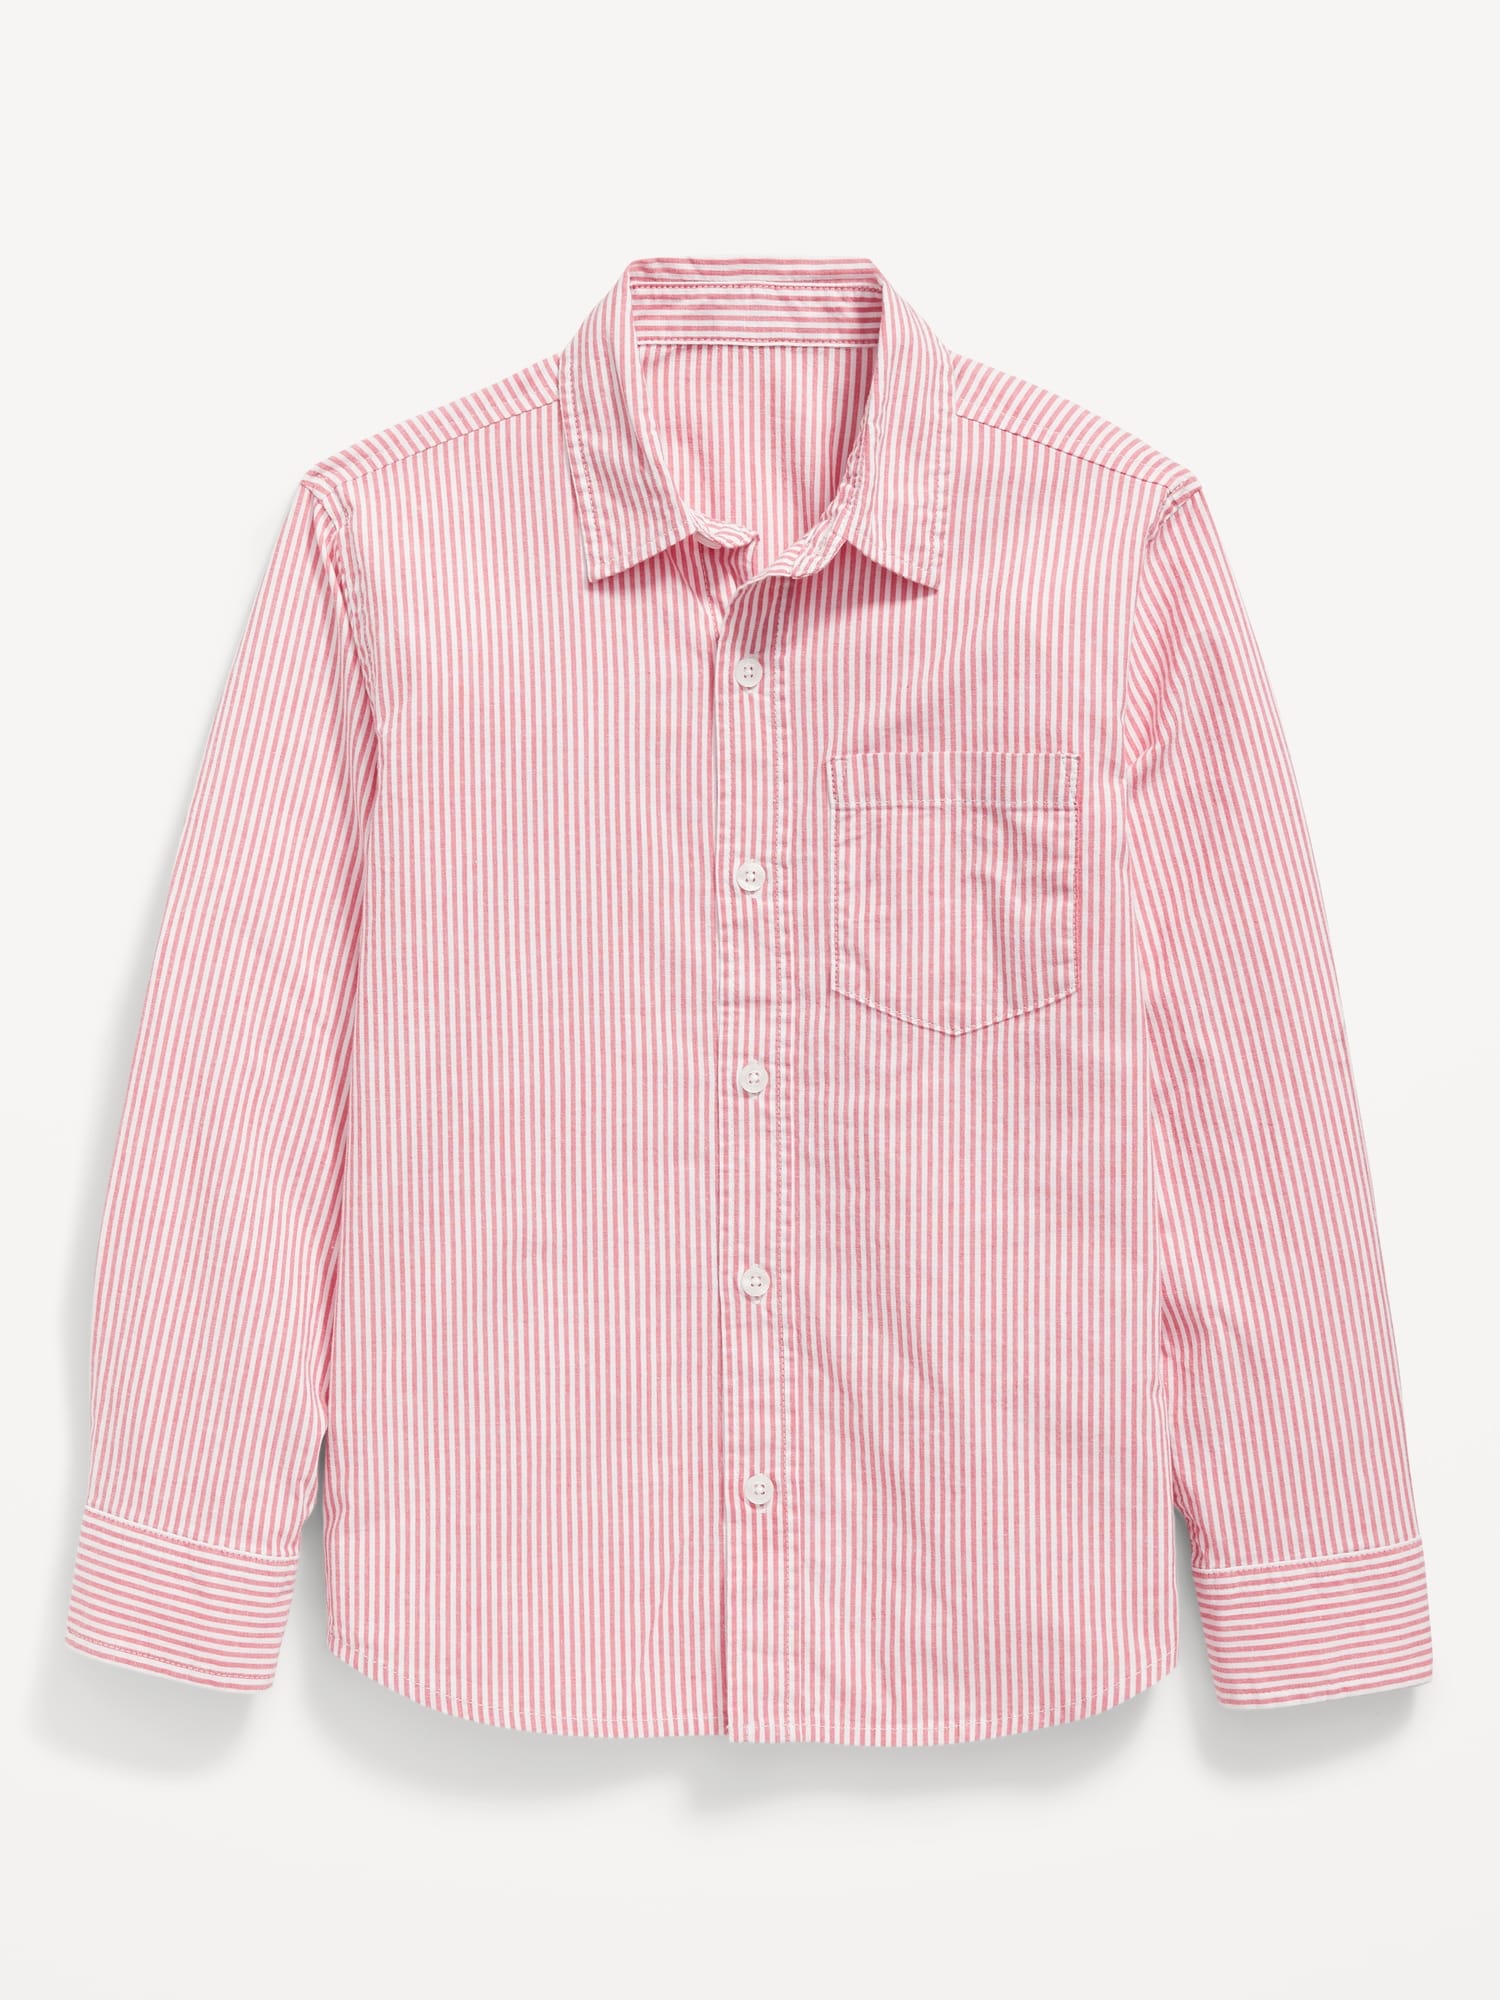 Old Navy Patterned Poplin Built-In Flex Shirt for Boys pink. 1